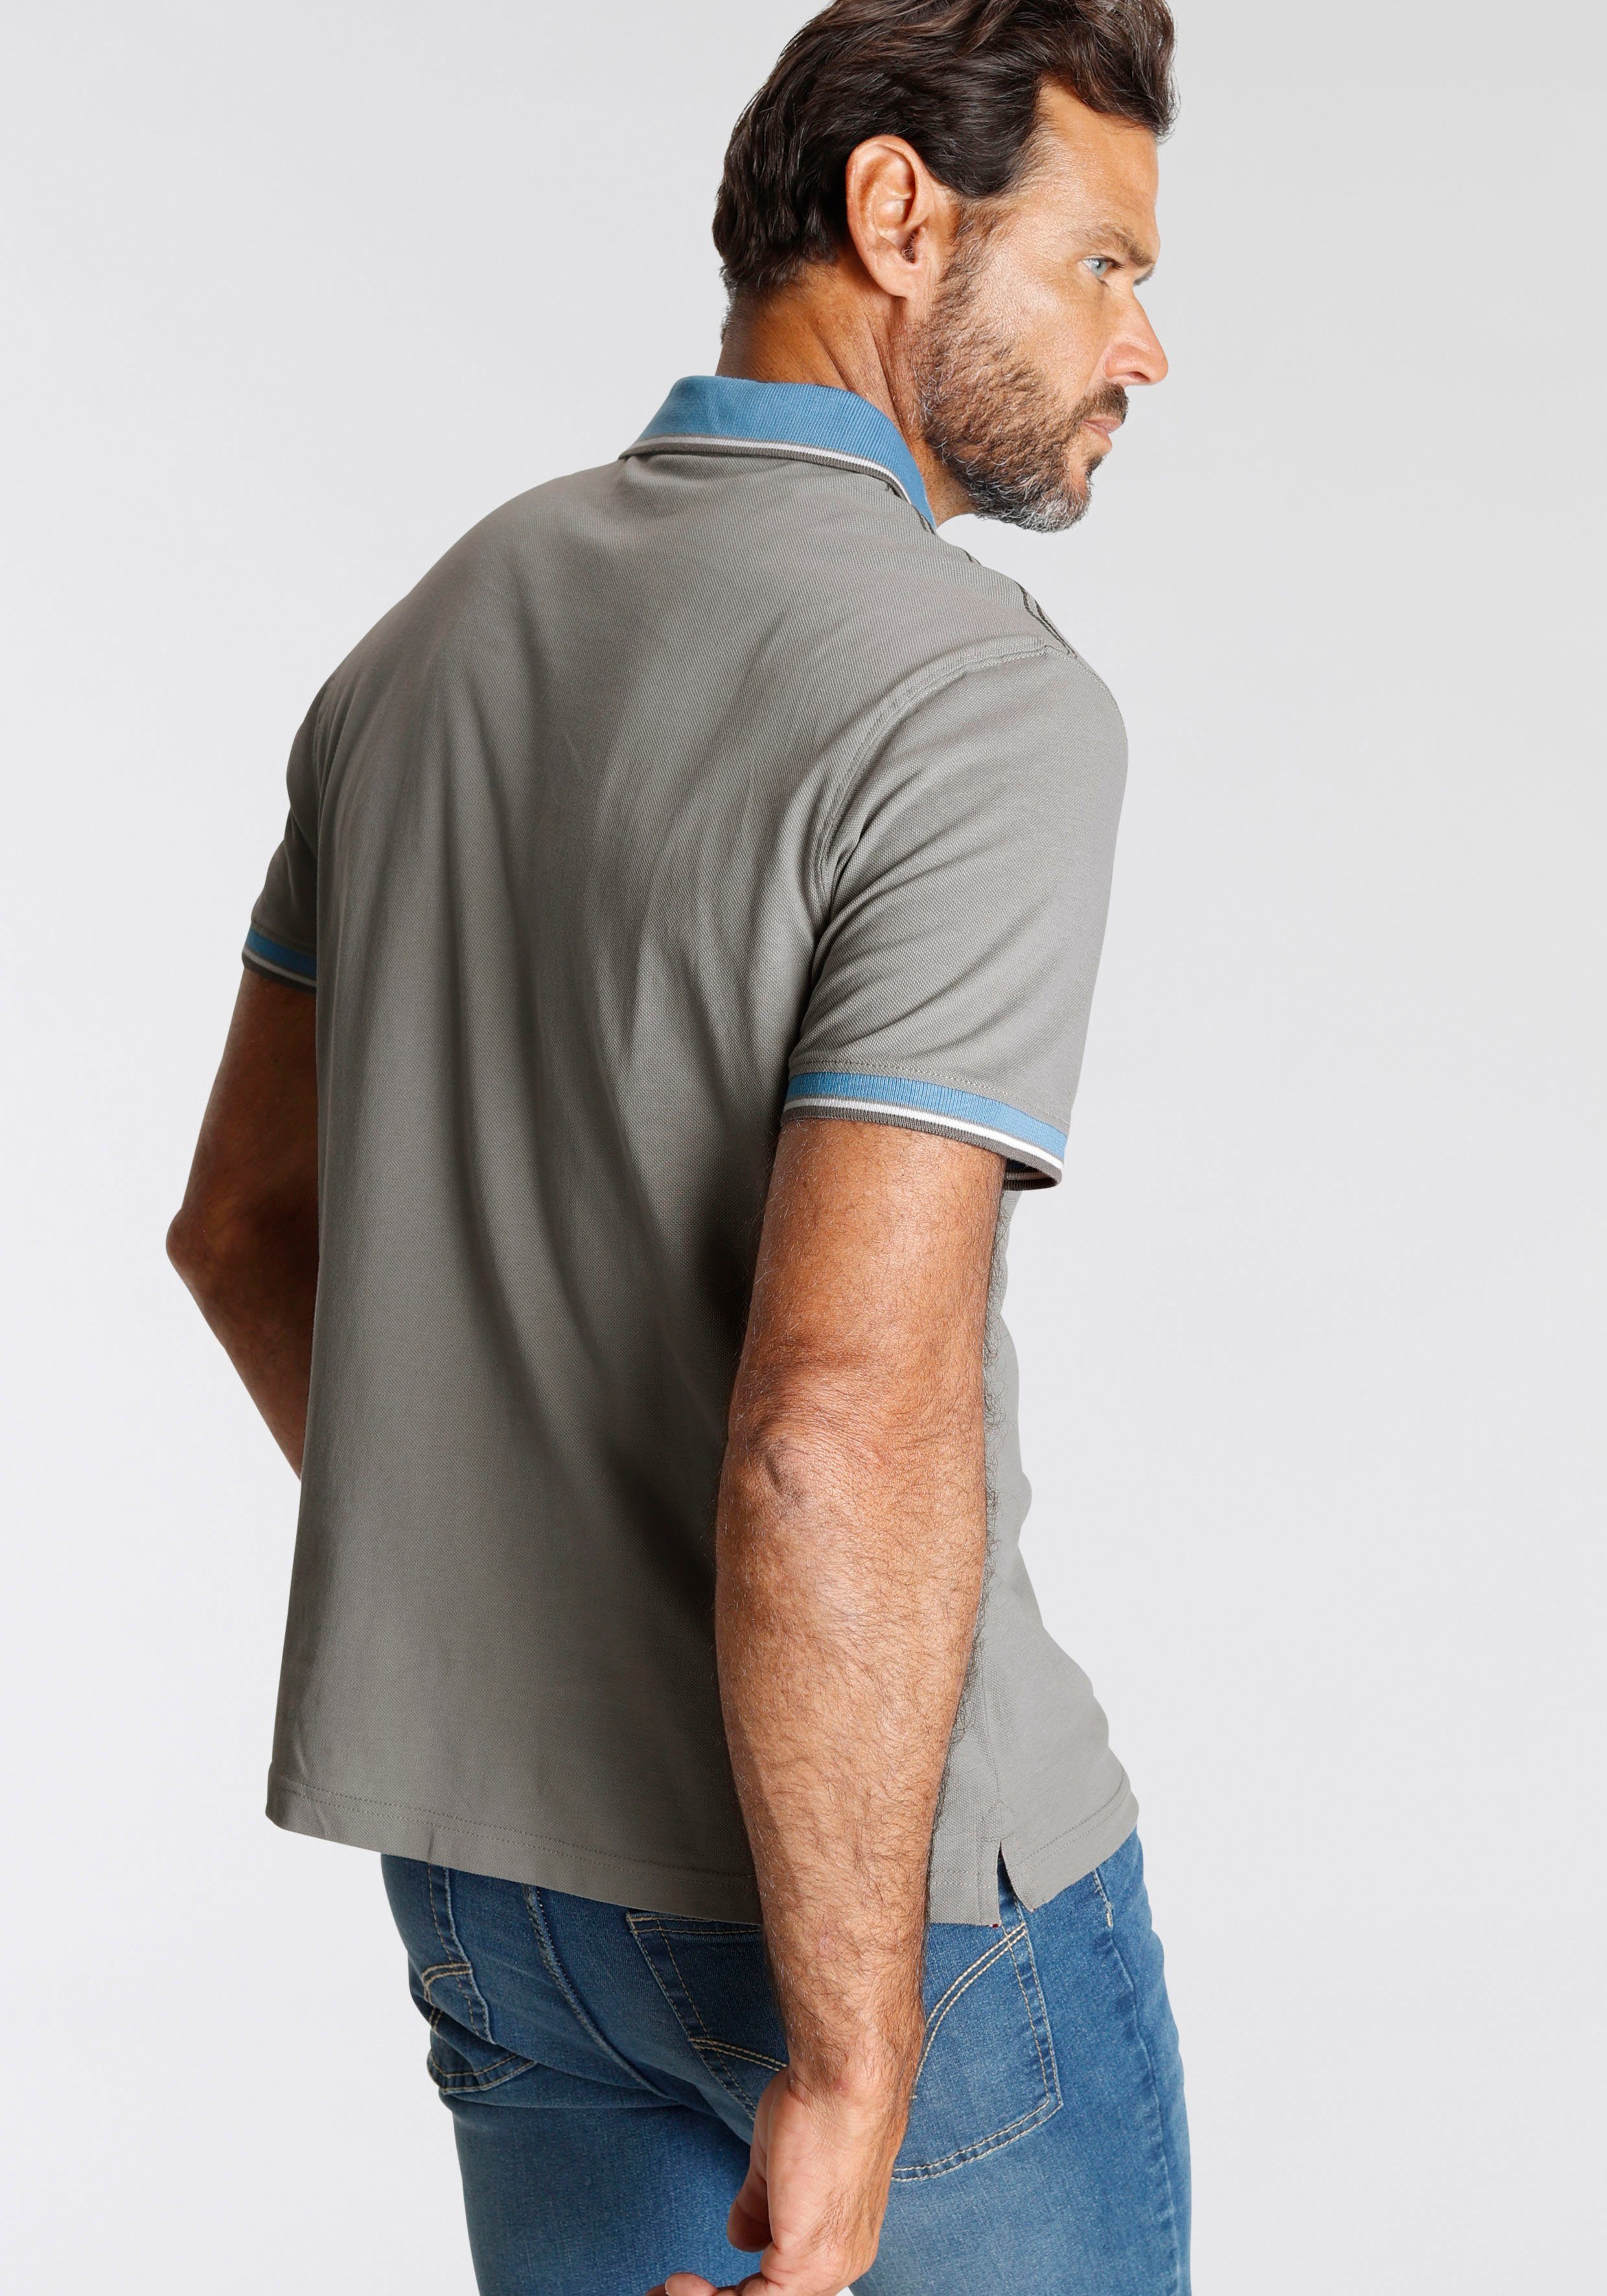 Man's Poloshirt kleinem grau mit World Brustprint